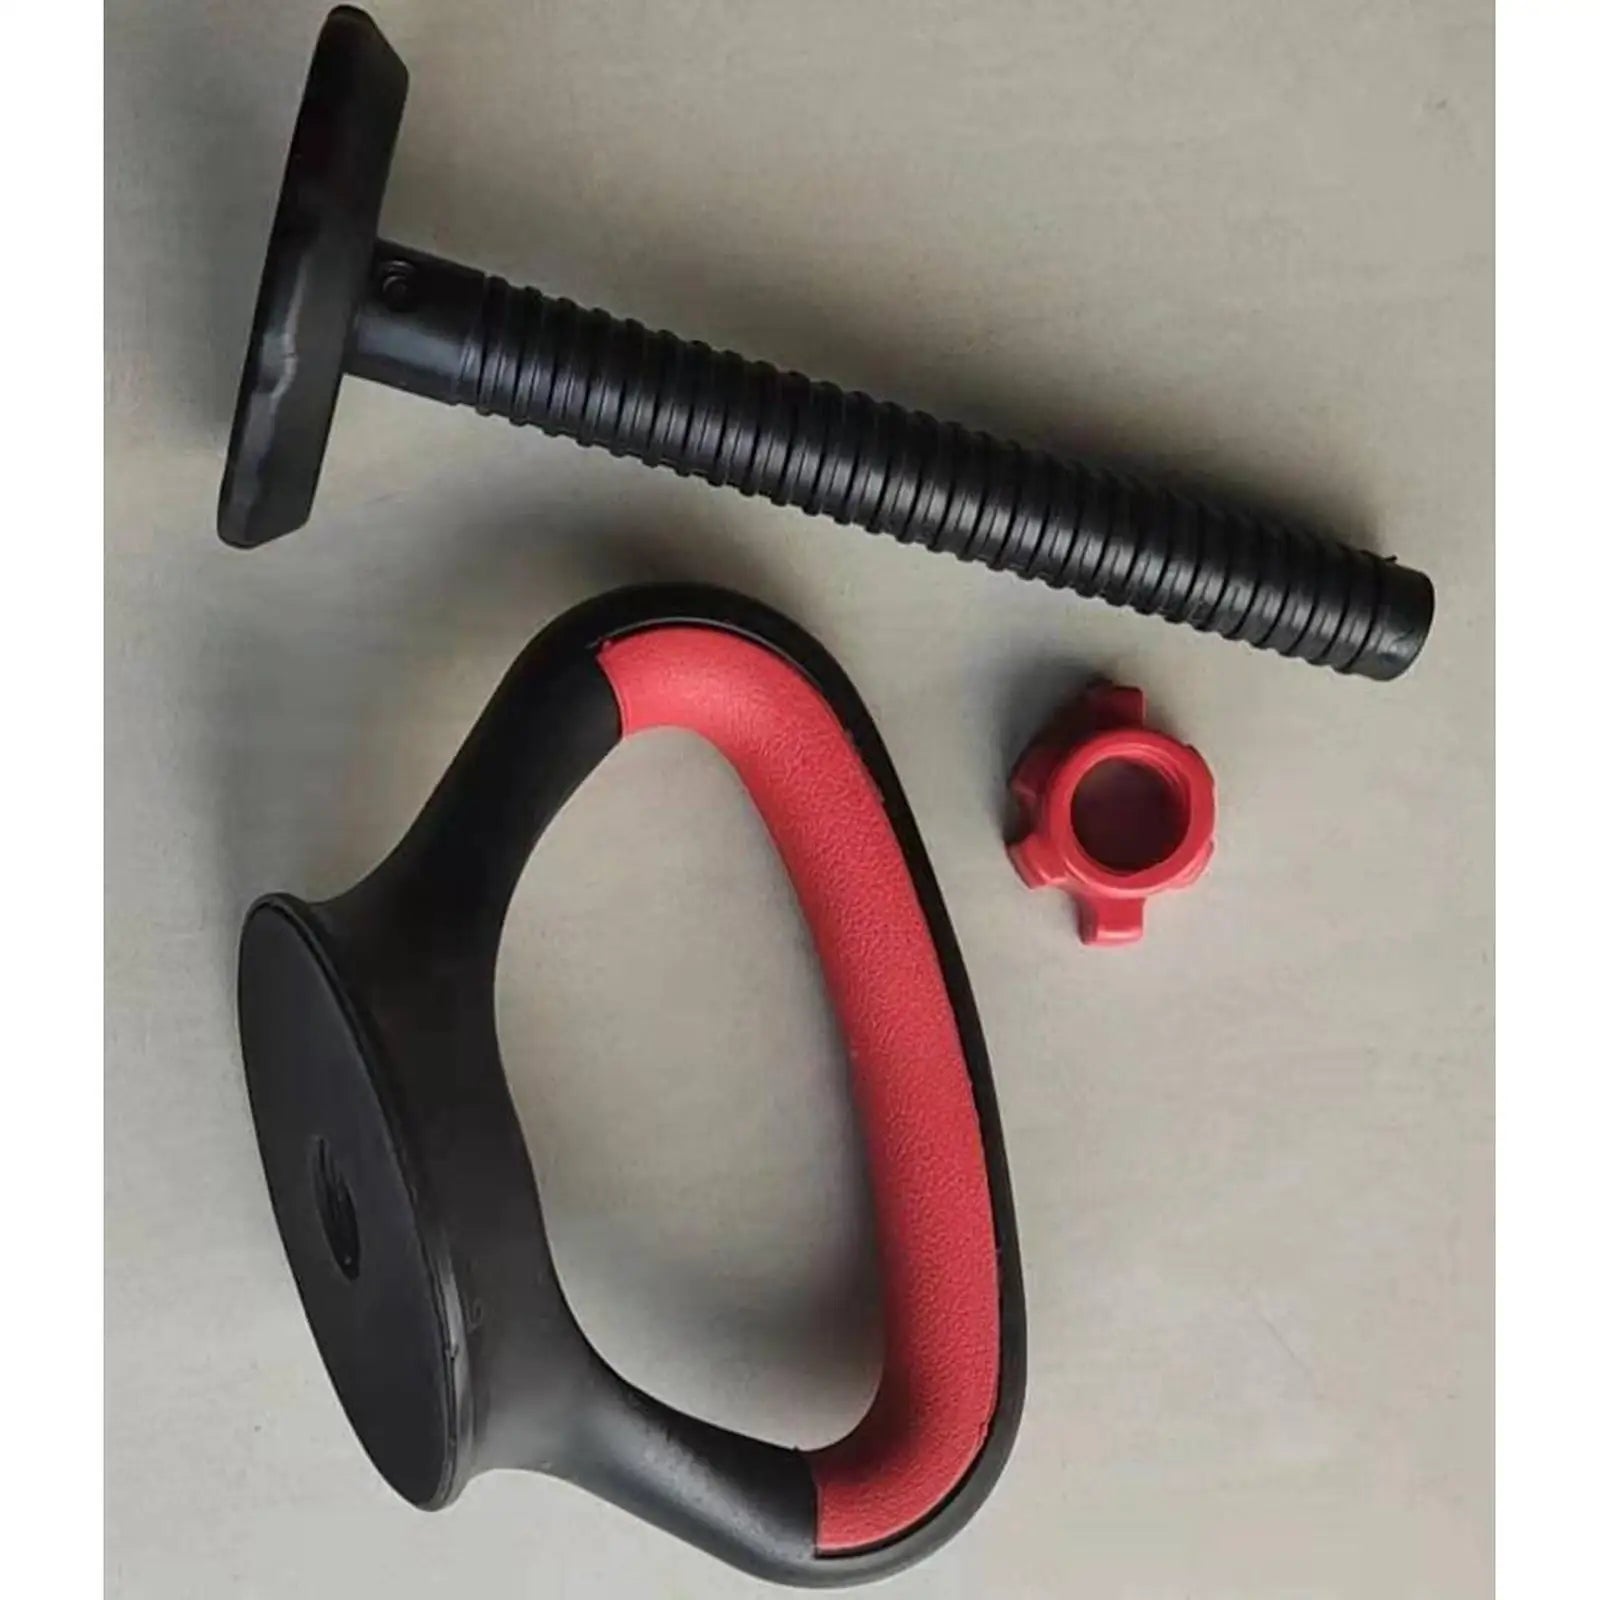 Arm Workout Kettlebell, Adjustable Metal Kettlebell Handle